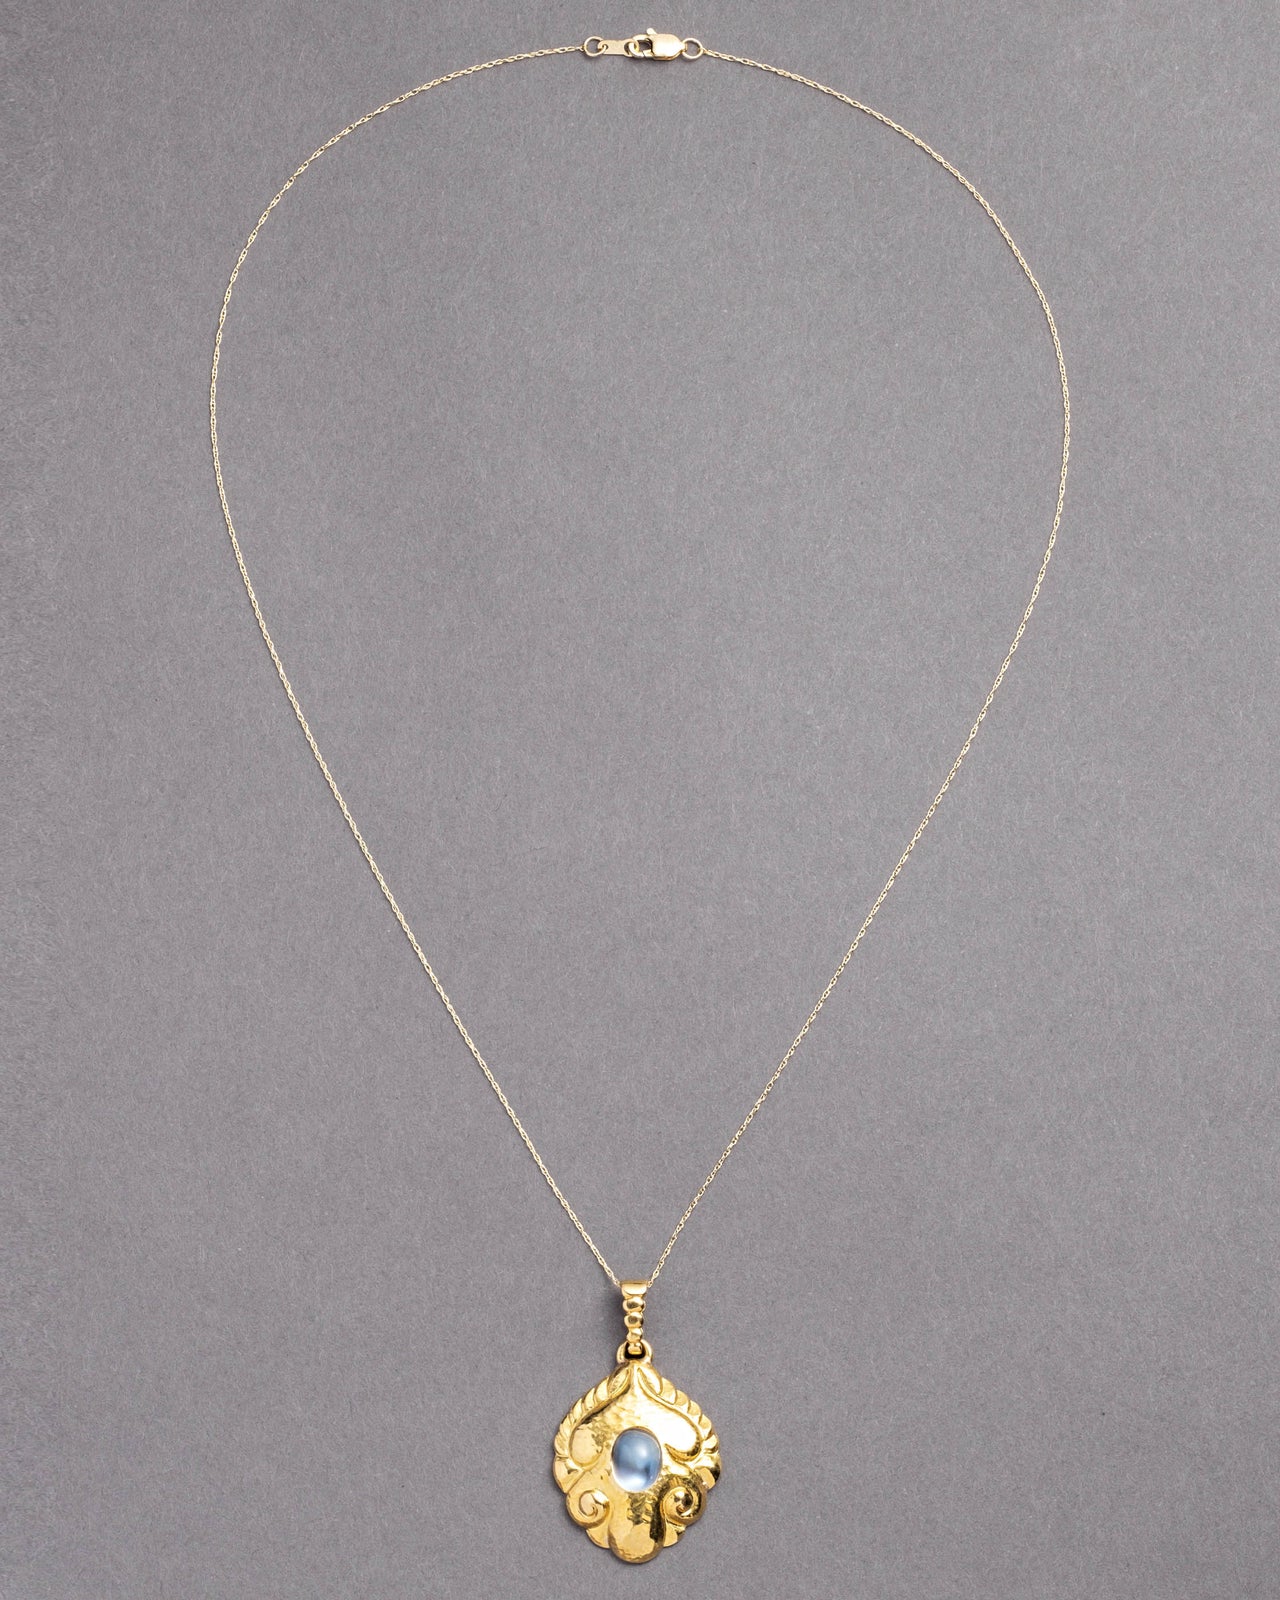 Antique Art Nouveau Moonstone and Hammered 14k Gold Pendant Necklace - Photo 2